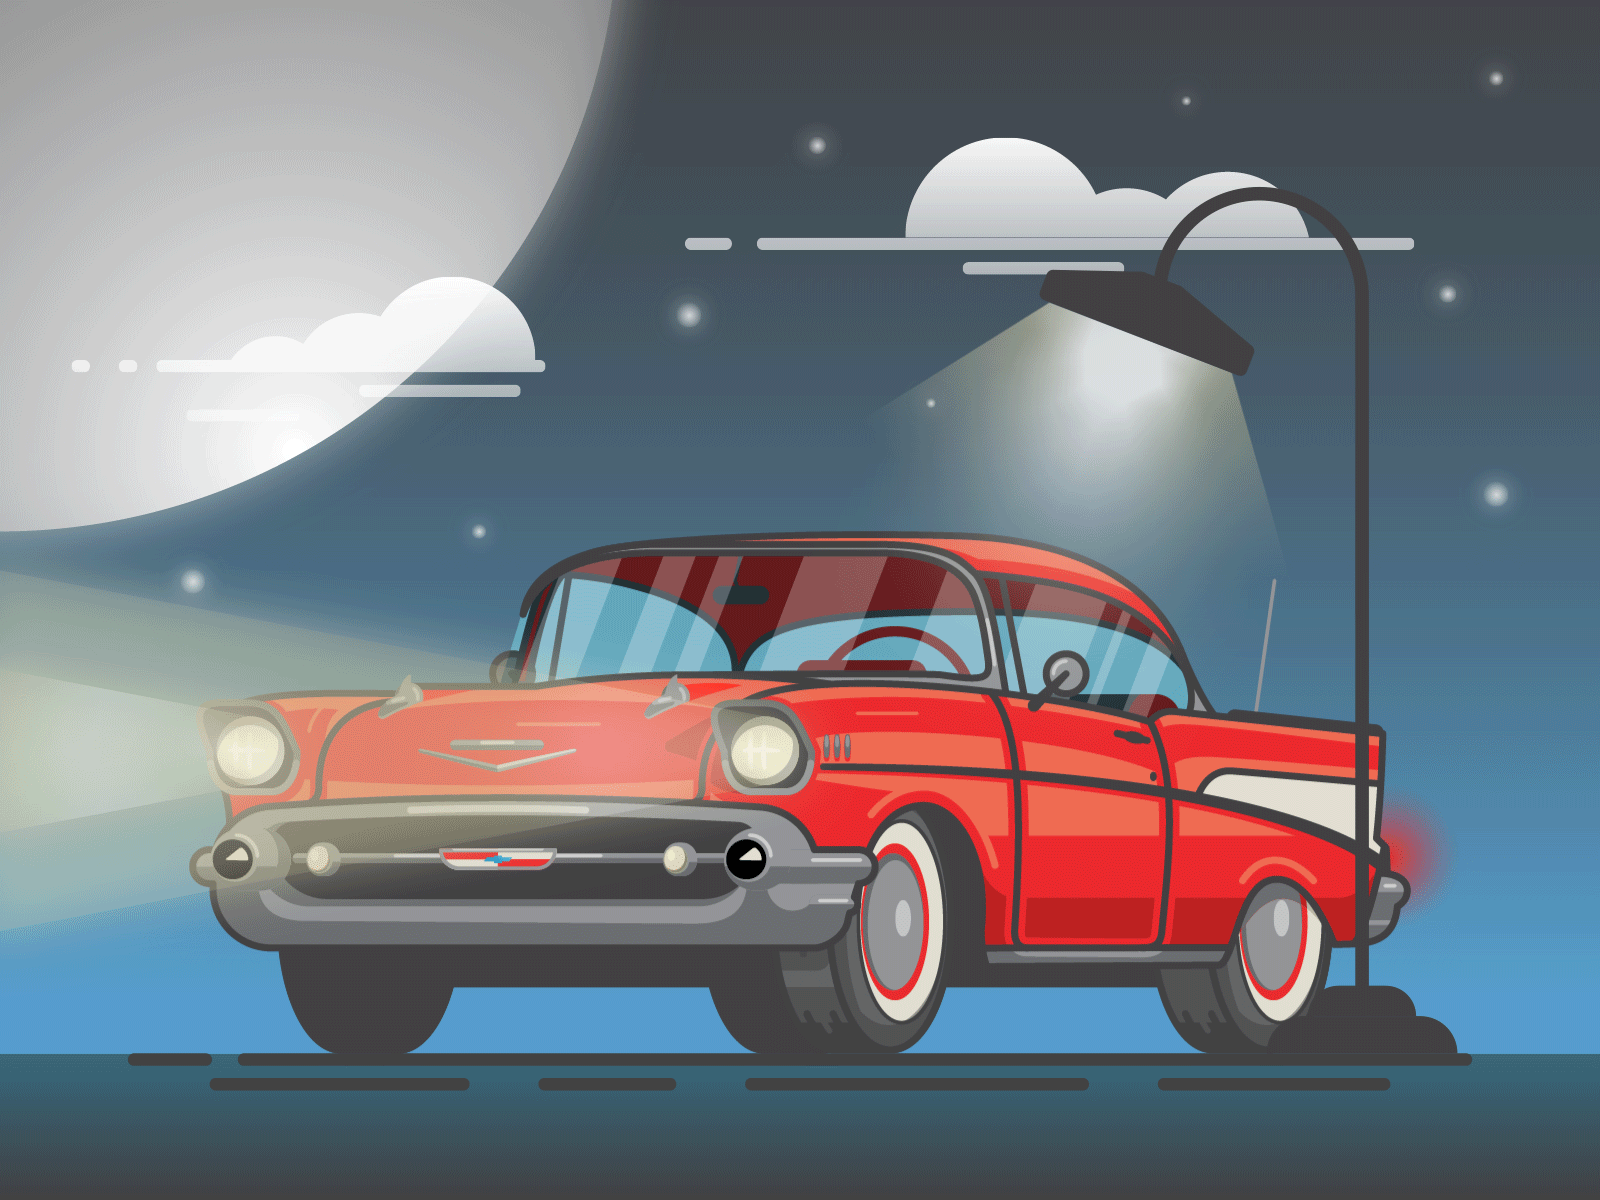 1957 Chevrolet Bel Air automobile bel air car chevrolet chevy illustration vehicle